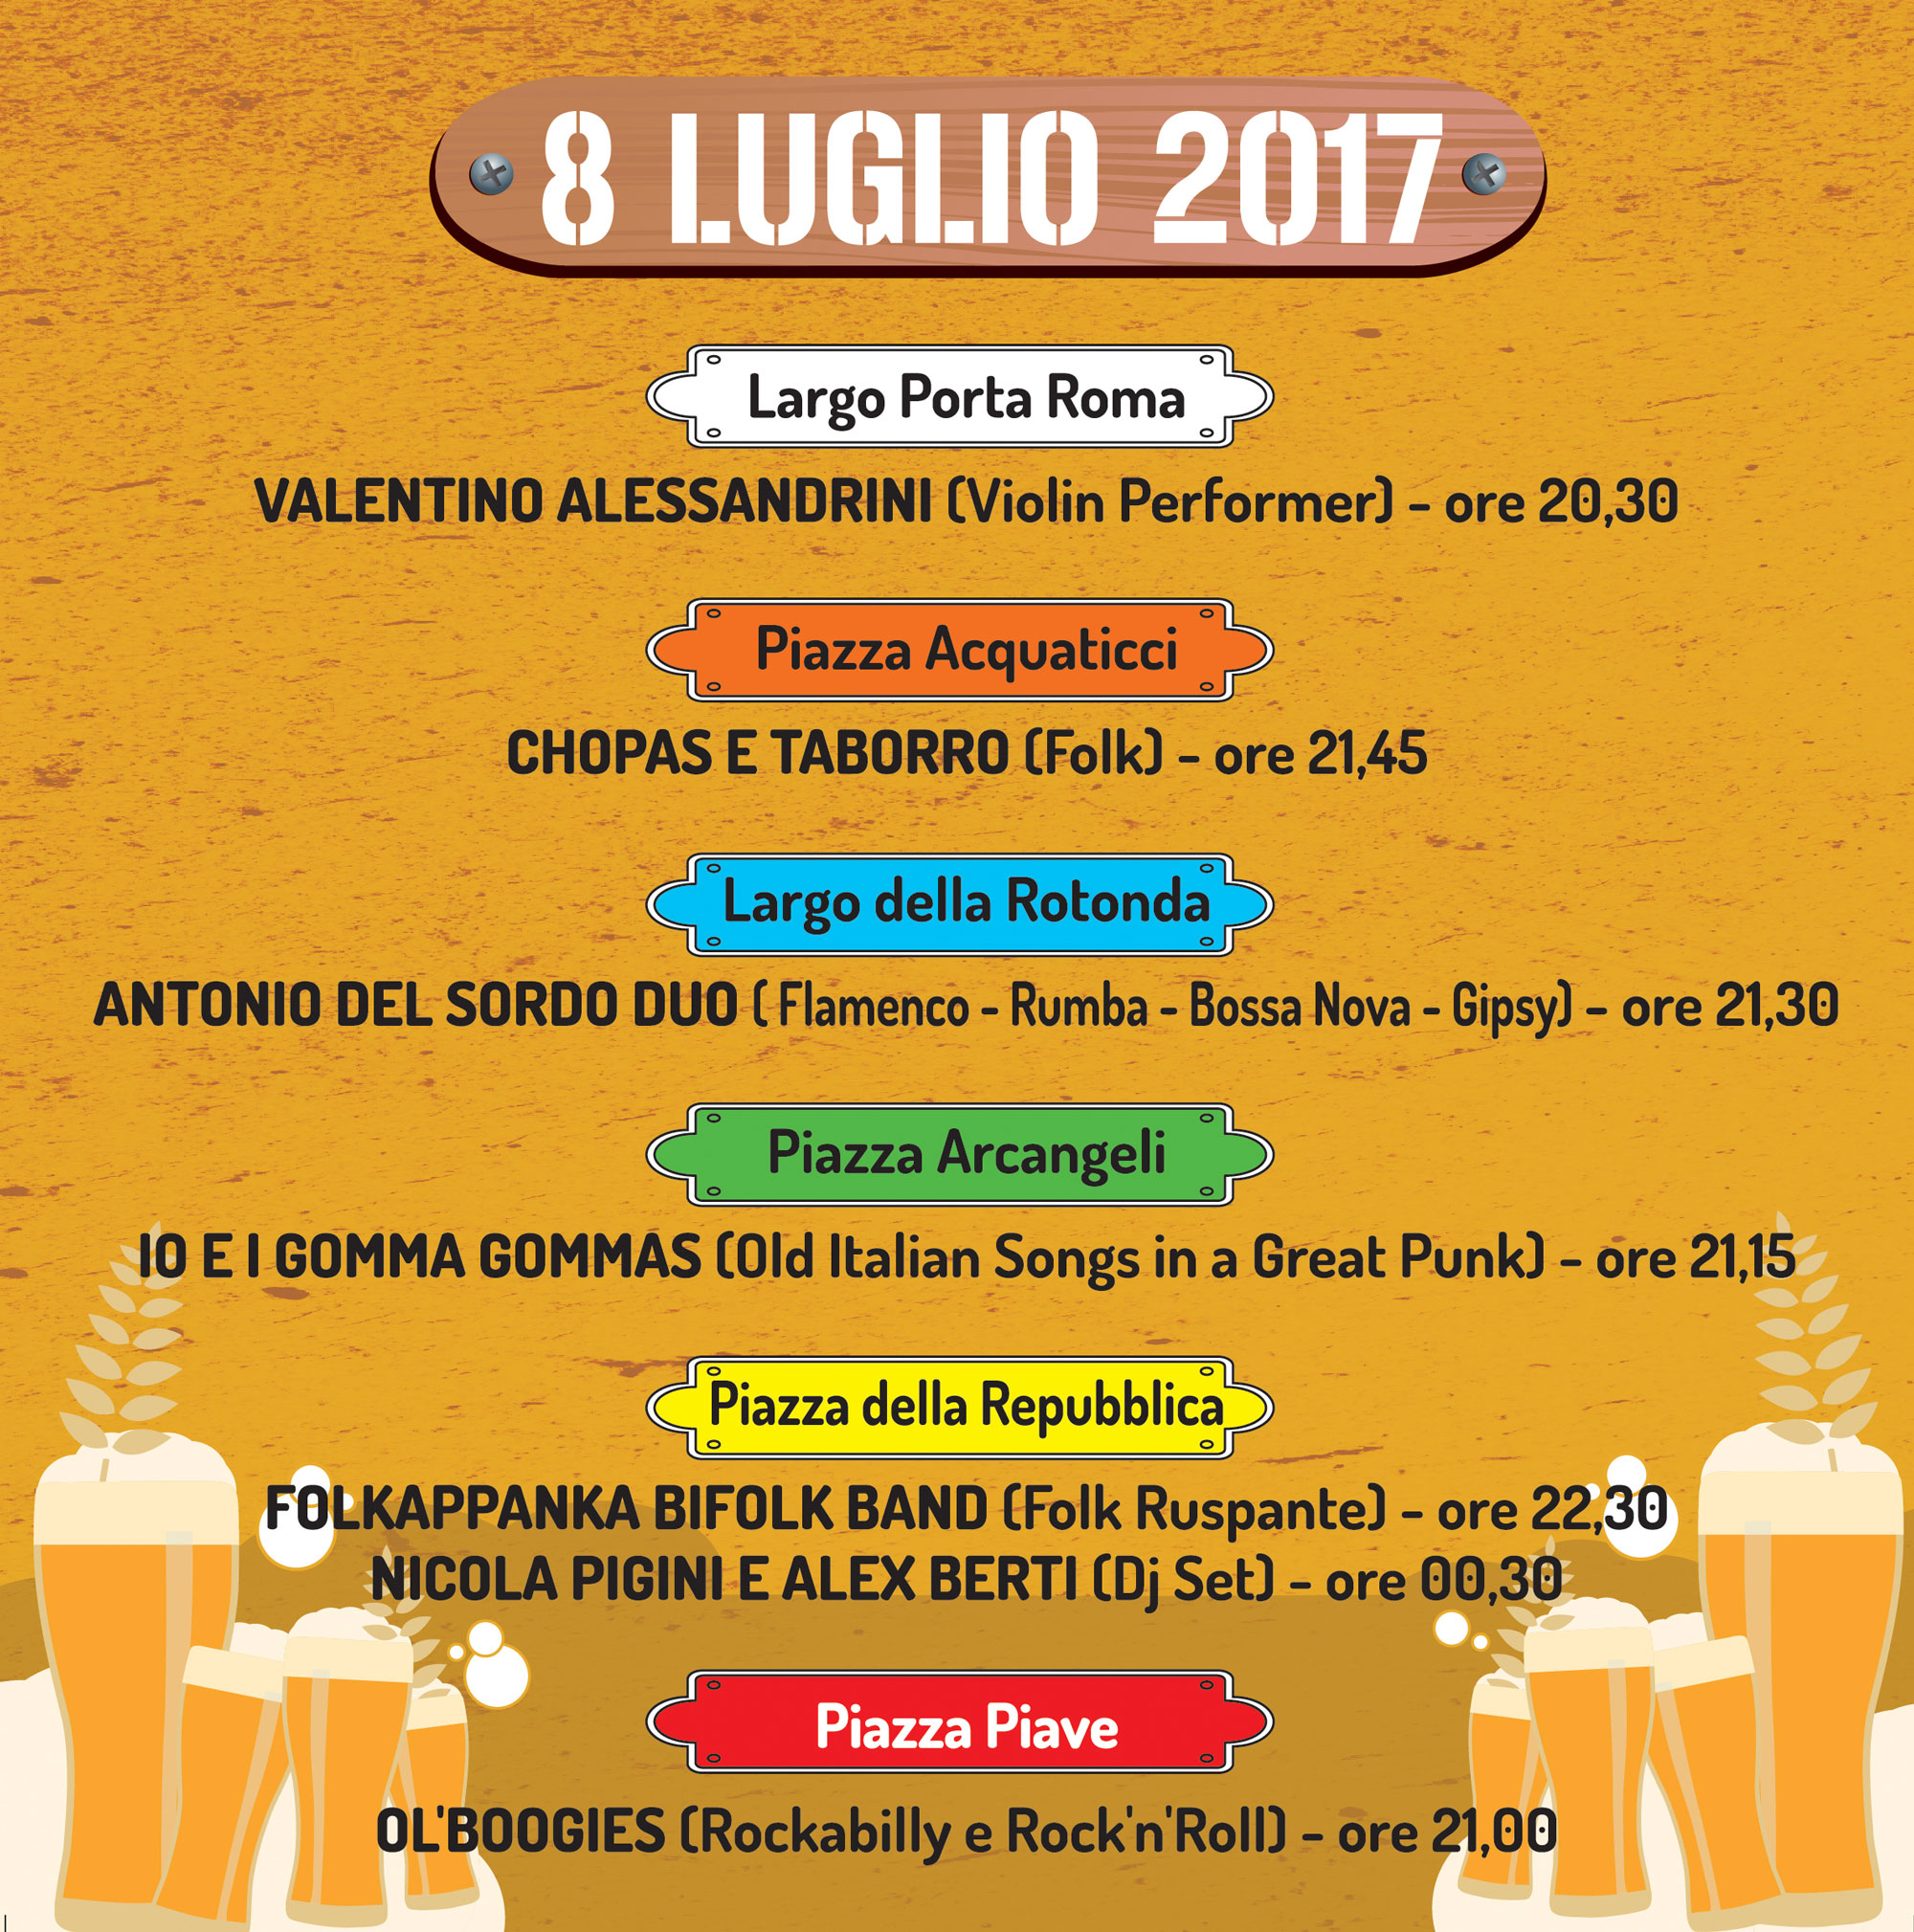 Treia Fermento festival delle birre artigianali 2017 Programma Sabato 8 luglio